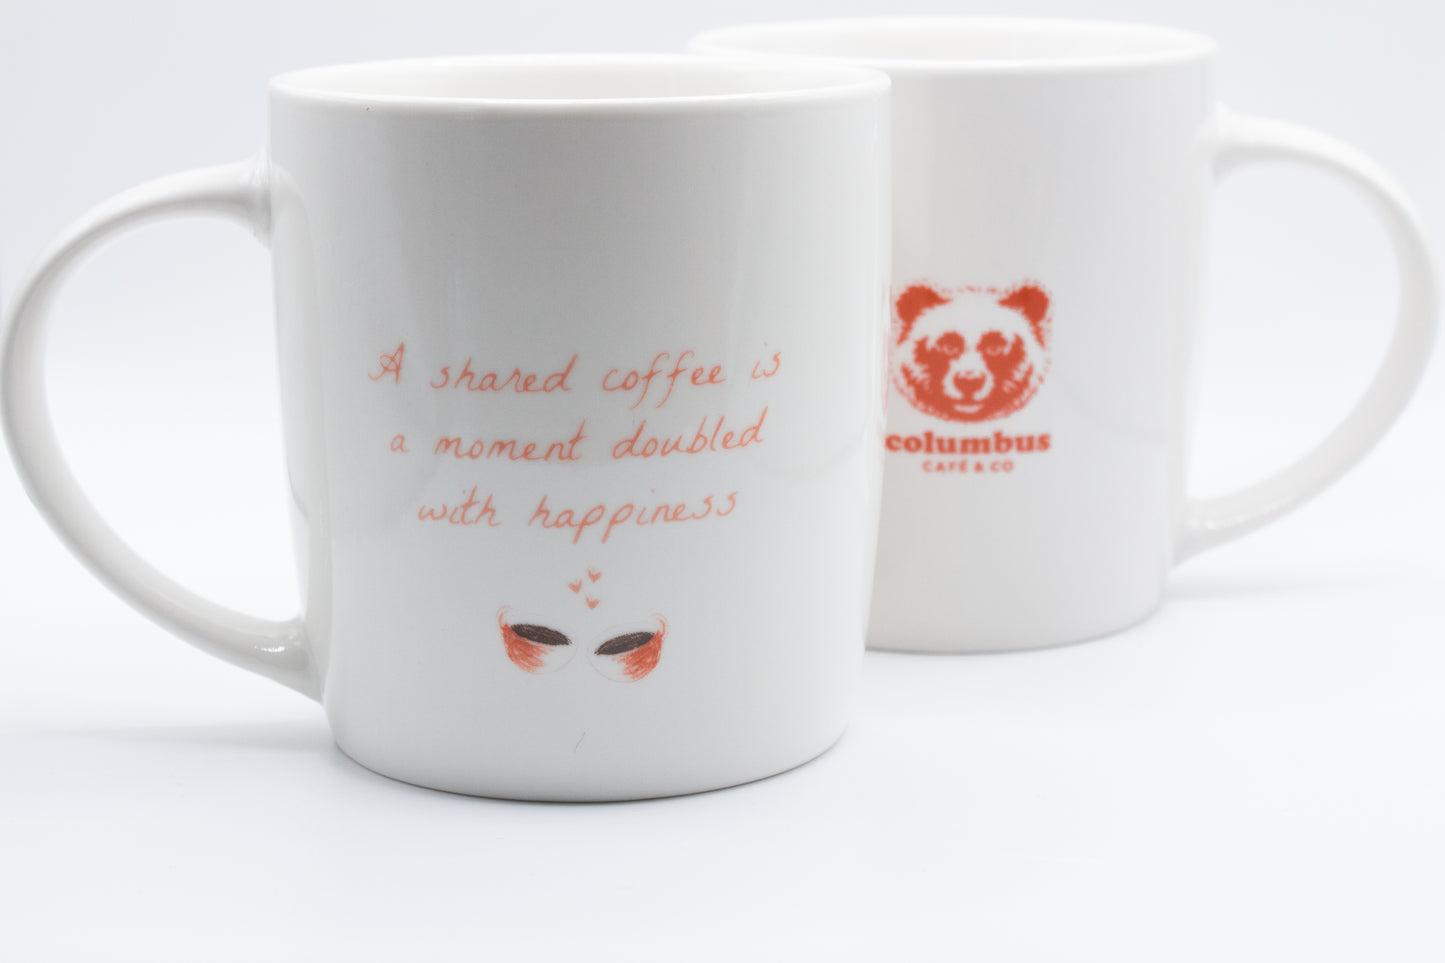 ENGLISH Valentine Mugs - Columbus Café (Box of 20 mugs)